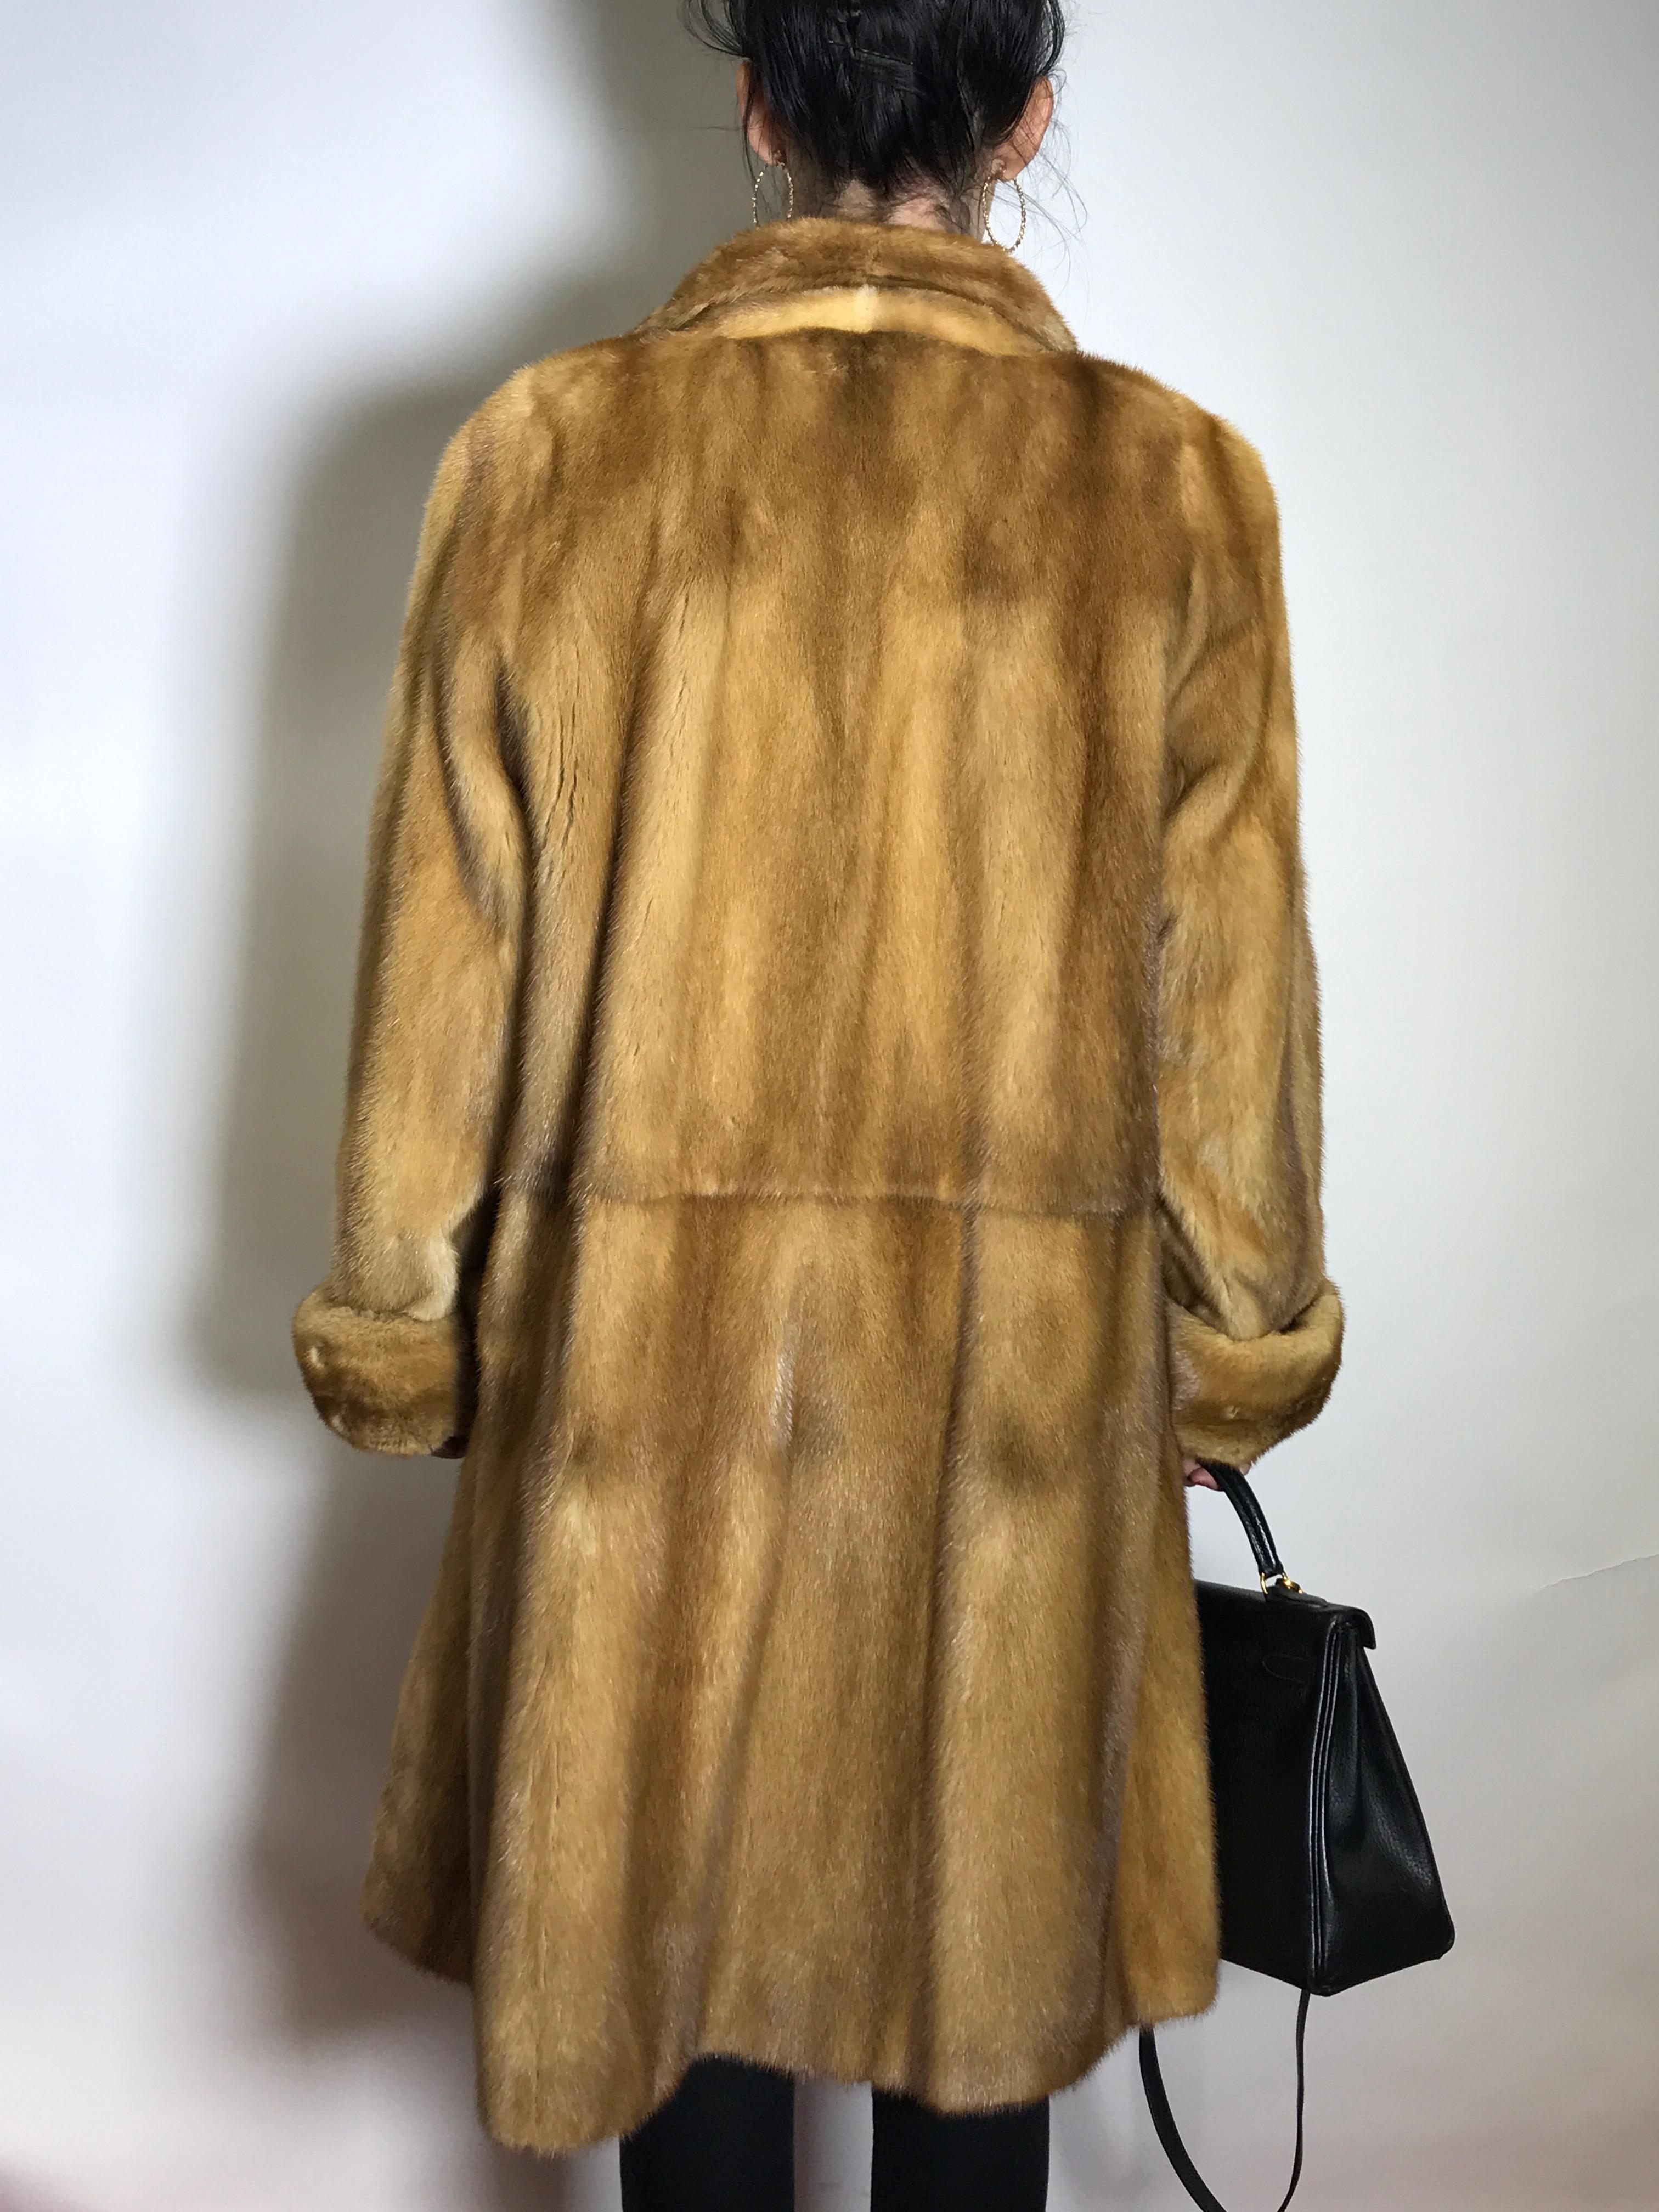 Women's  Saga mink silk fur 3/4 jacket / coat. Tan/beige. Gold mink. (9) For Sale